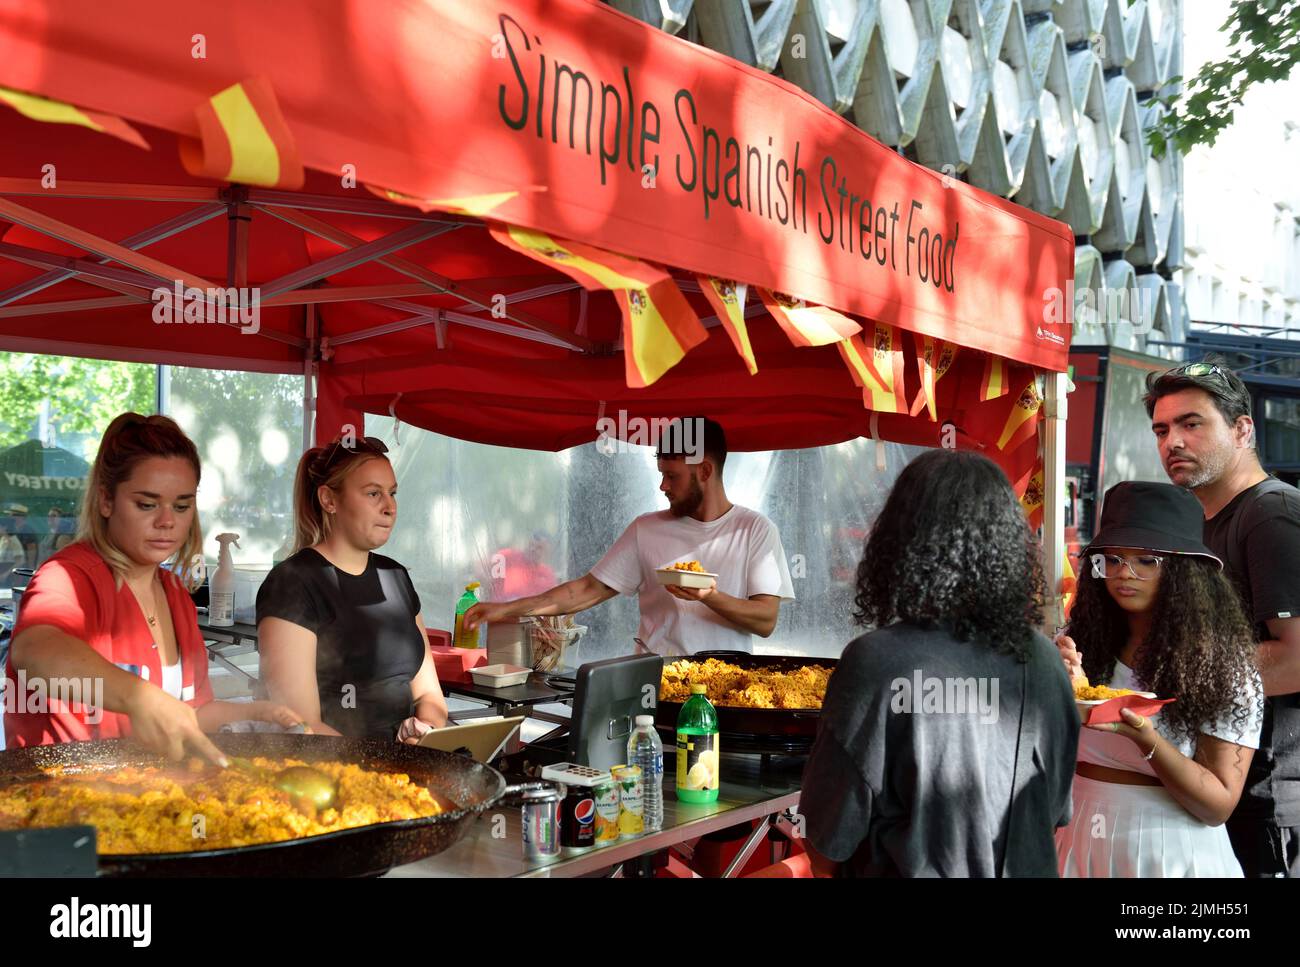 Takeaway Spanish street food stall at festival, UK Stock Photo